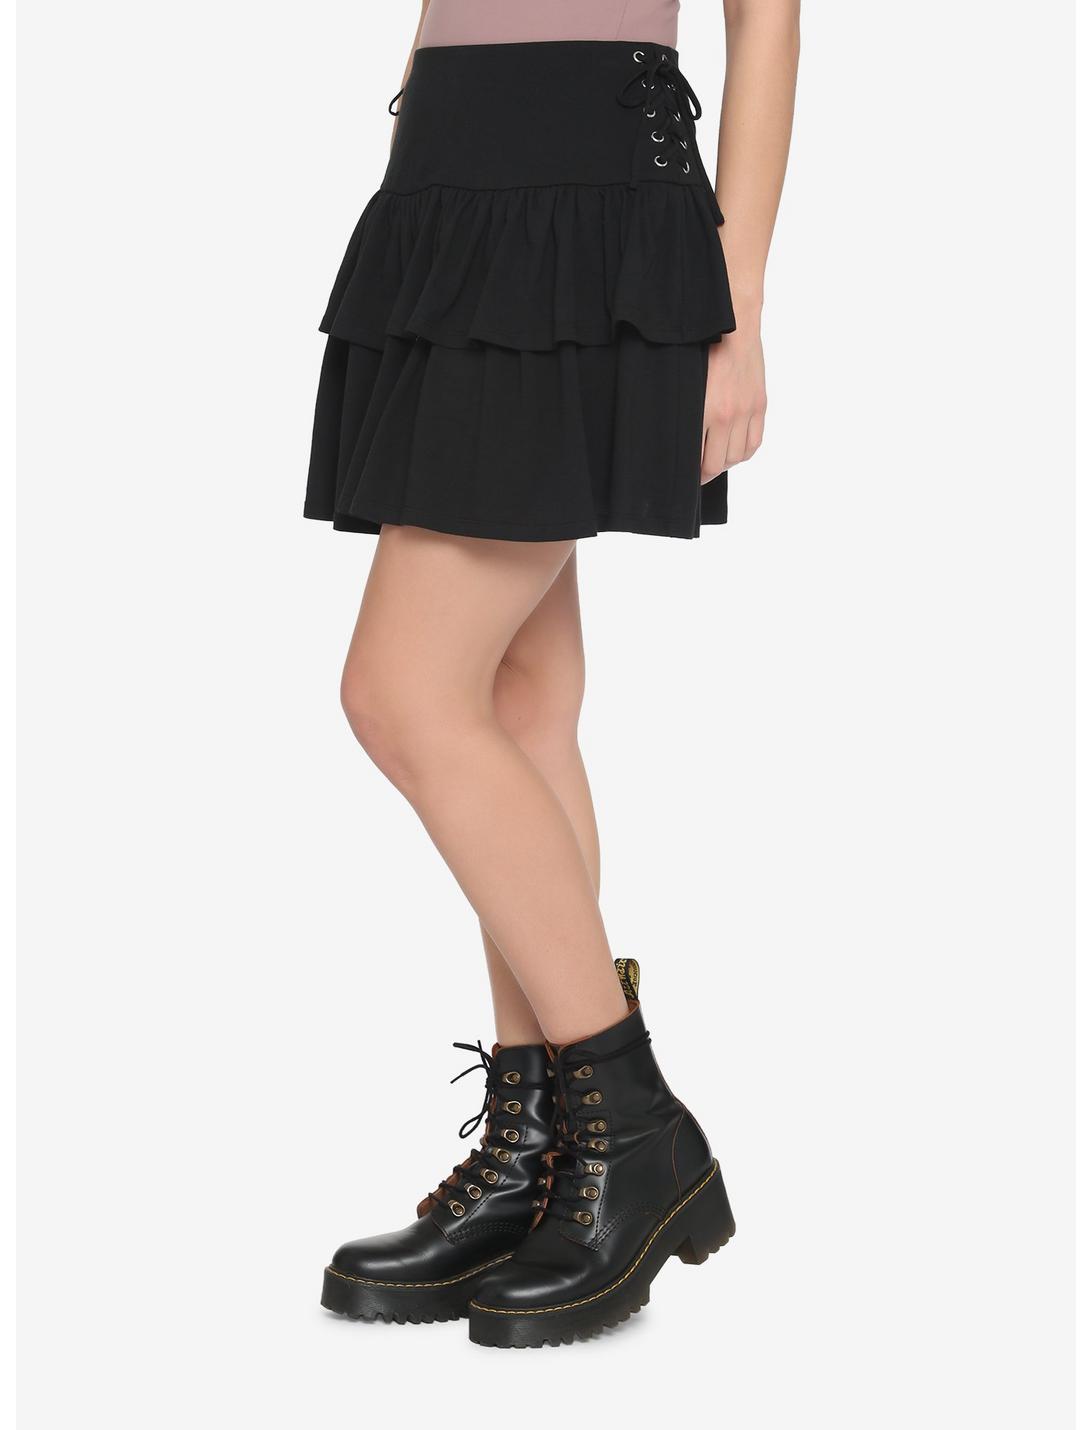 Black Lace-Up Tiered Skirt, BLACK, hi-res